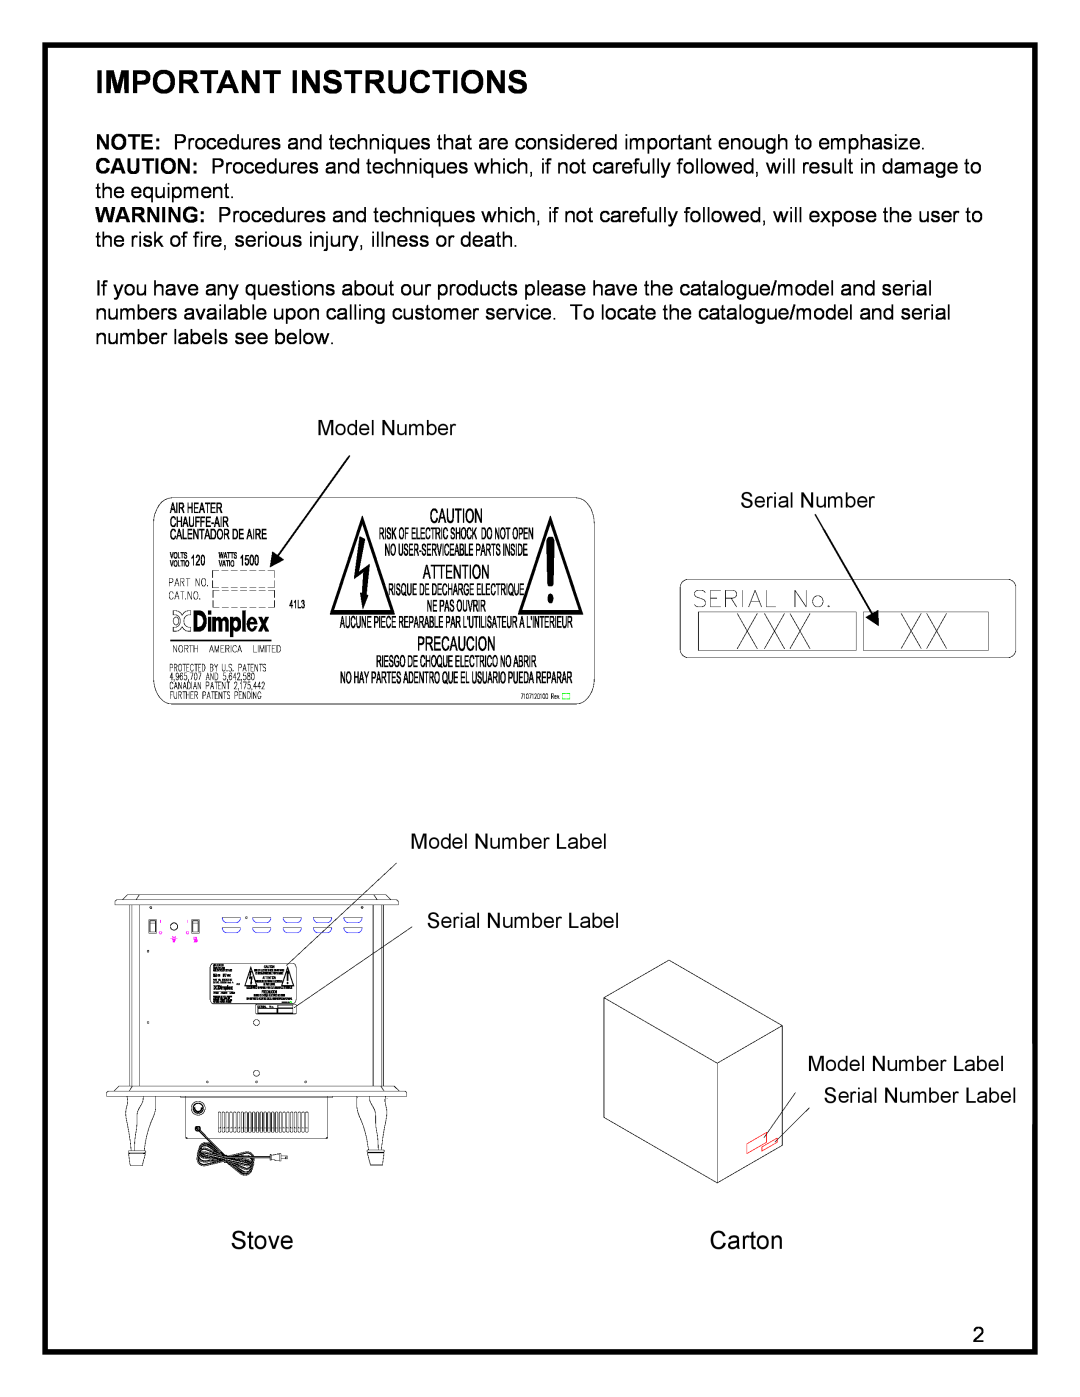 Dimplex ELECTRIC STOVE manual Important Instructions, Stove, Carton 